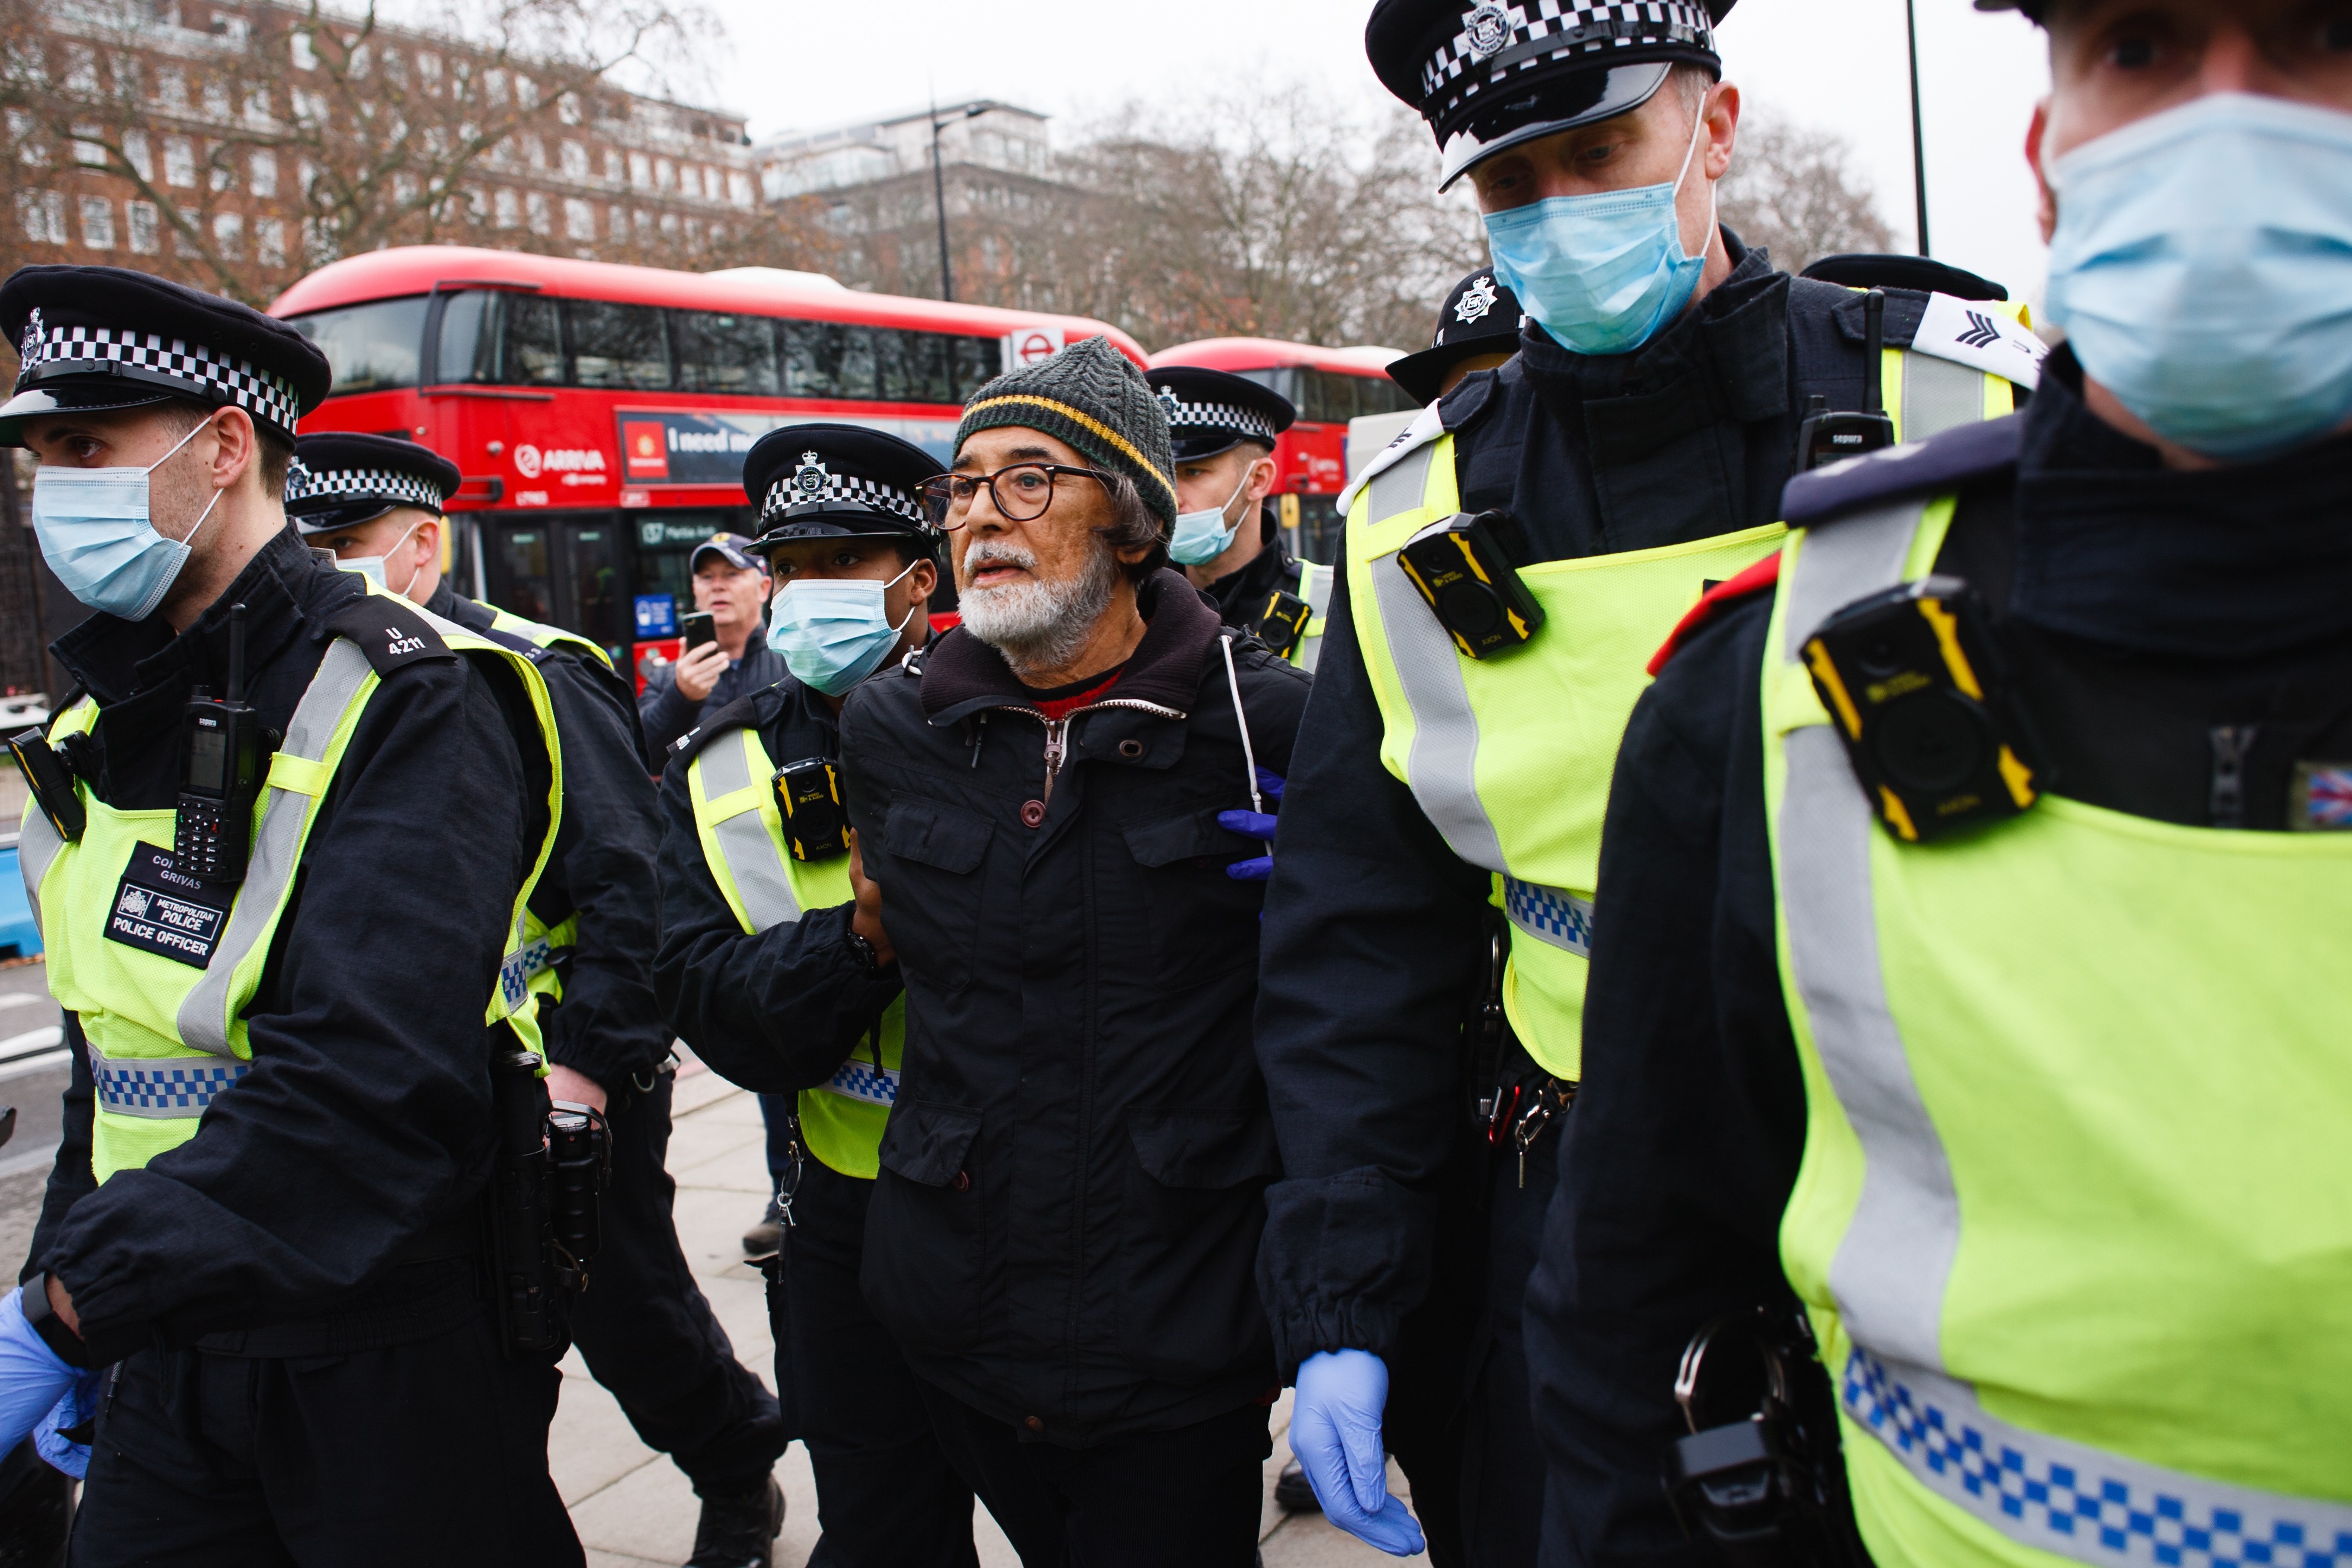 Manifestantes anti-lockdown são presos em Londres (Foto: Getty Images)